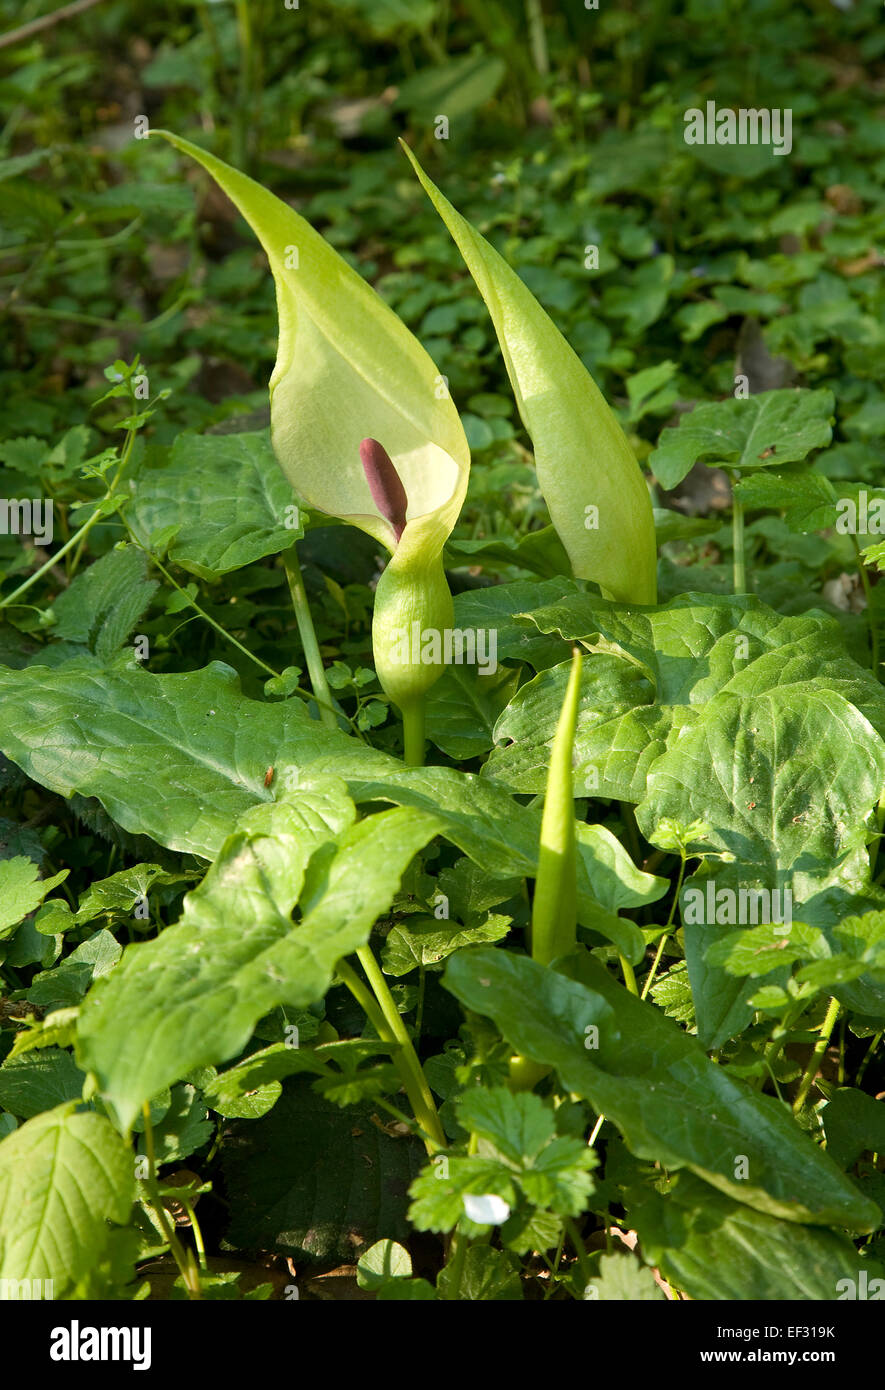 Arum Lily or Cuckoopint (Arum maculatum), Belgium Stock Photo